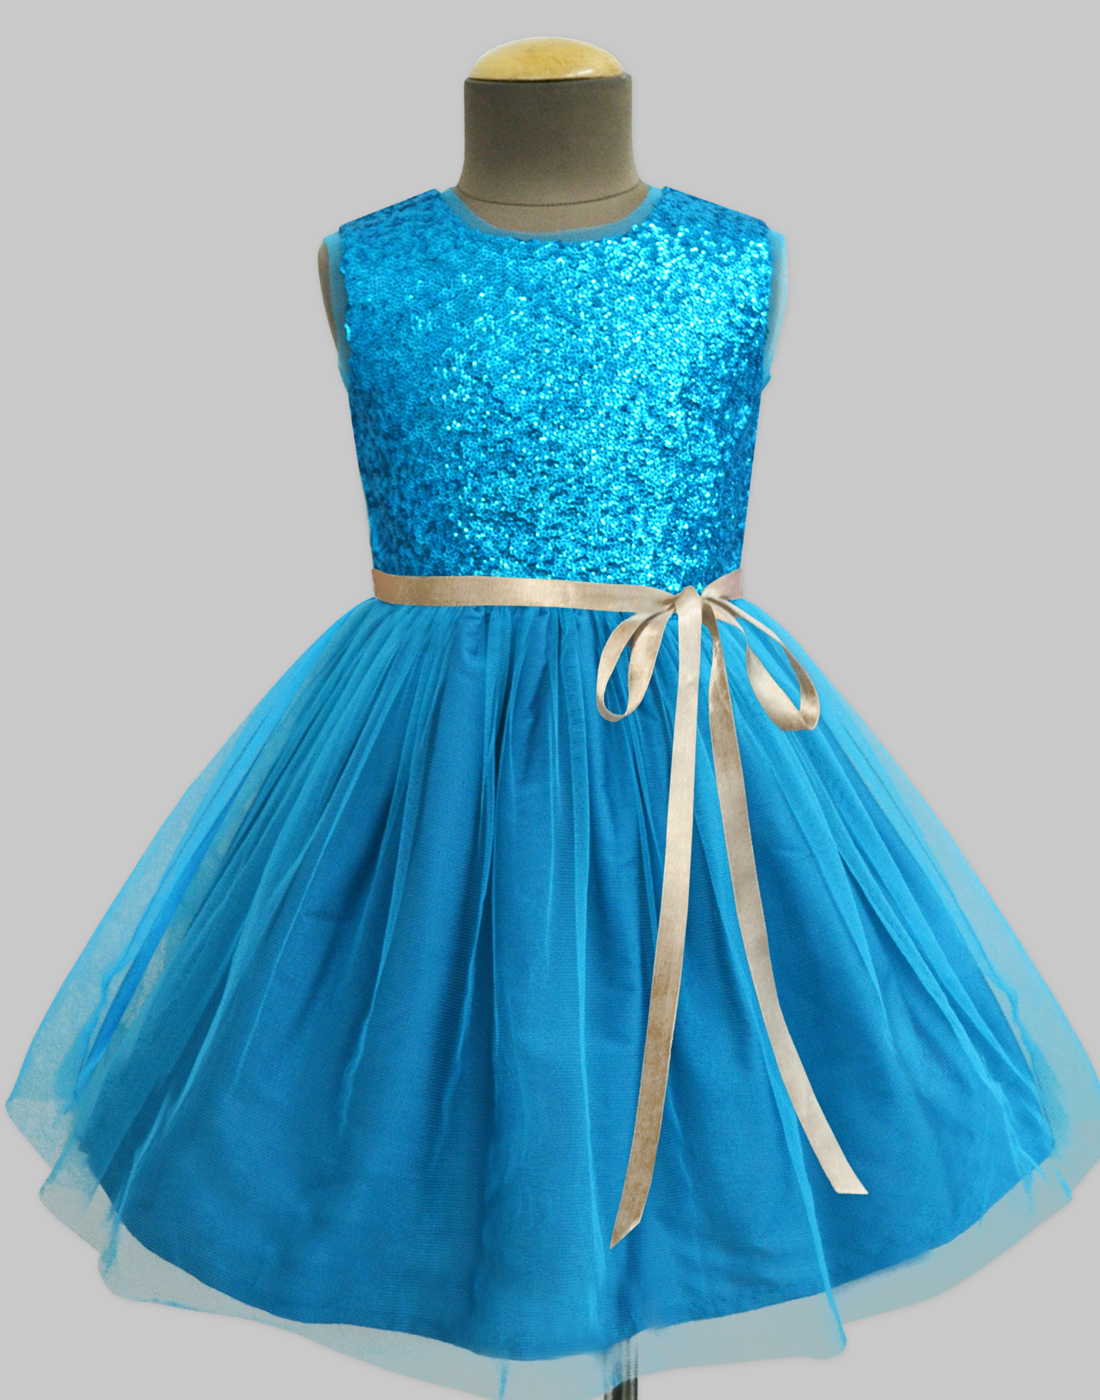 Buy Glitter Dress Plus Size online | Lazada.com.ph